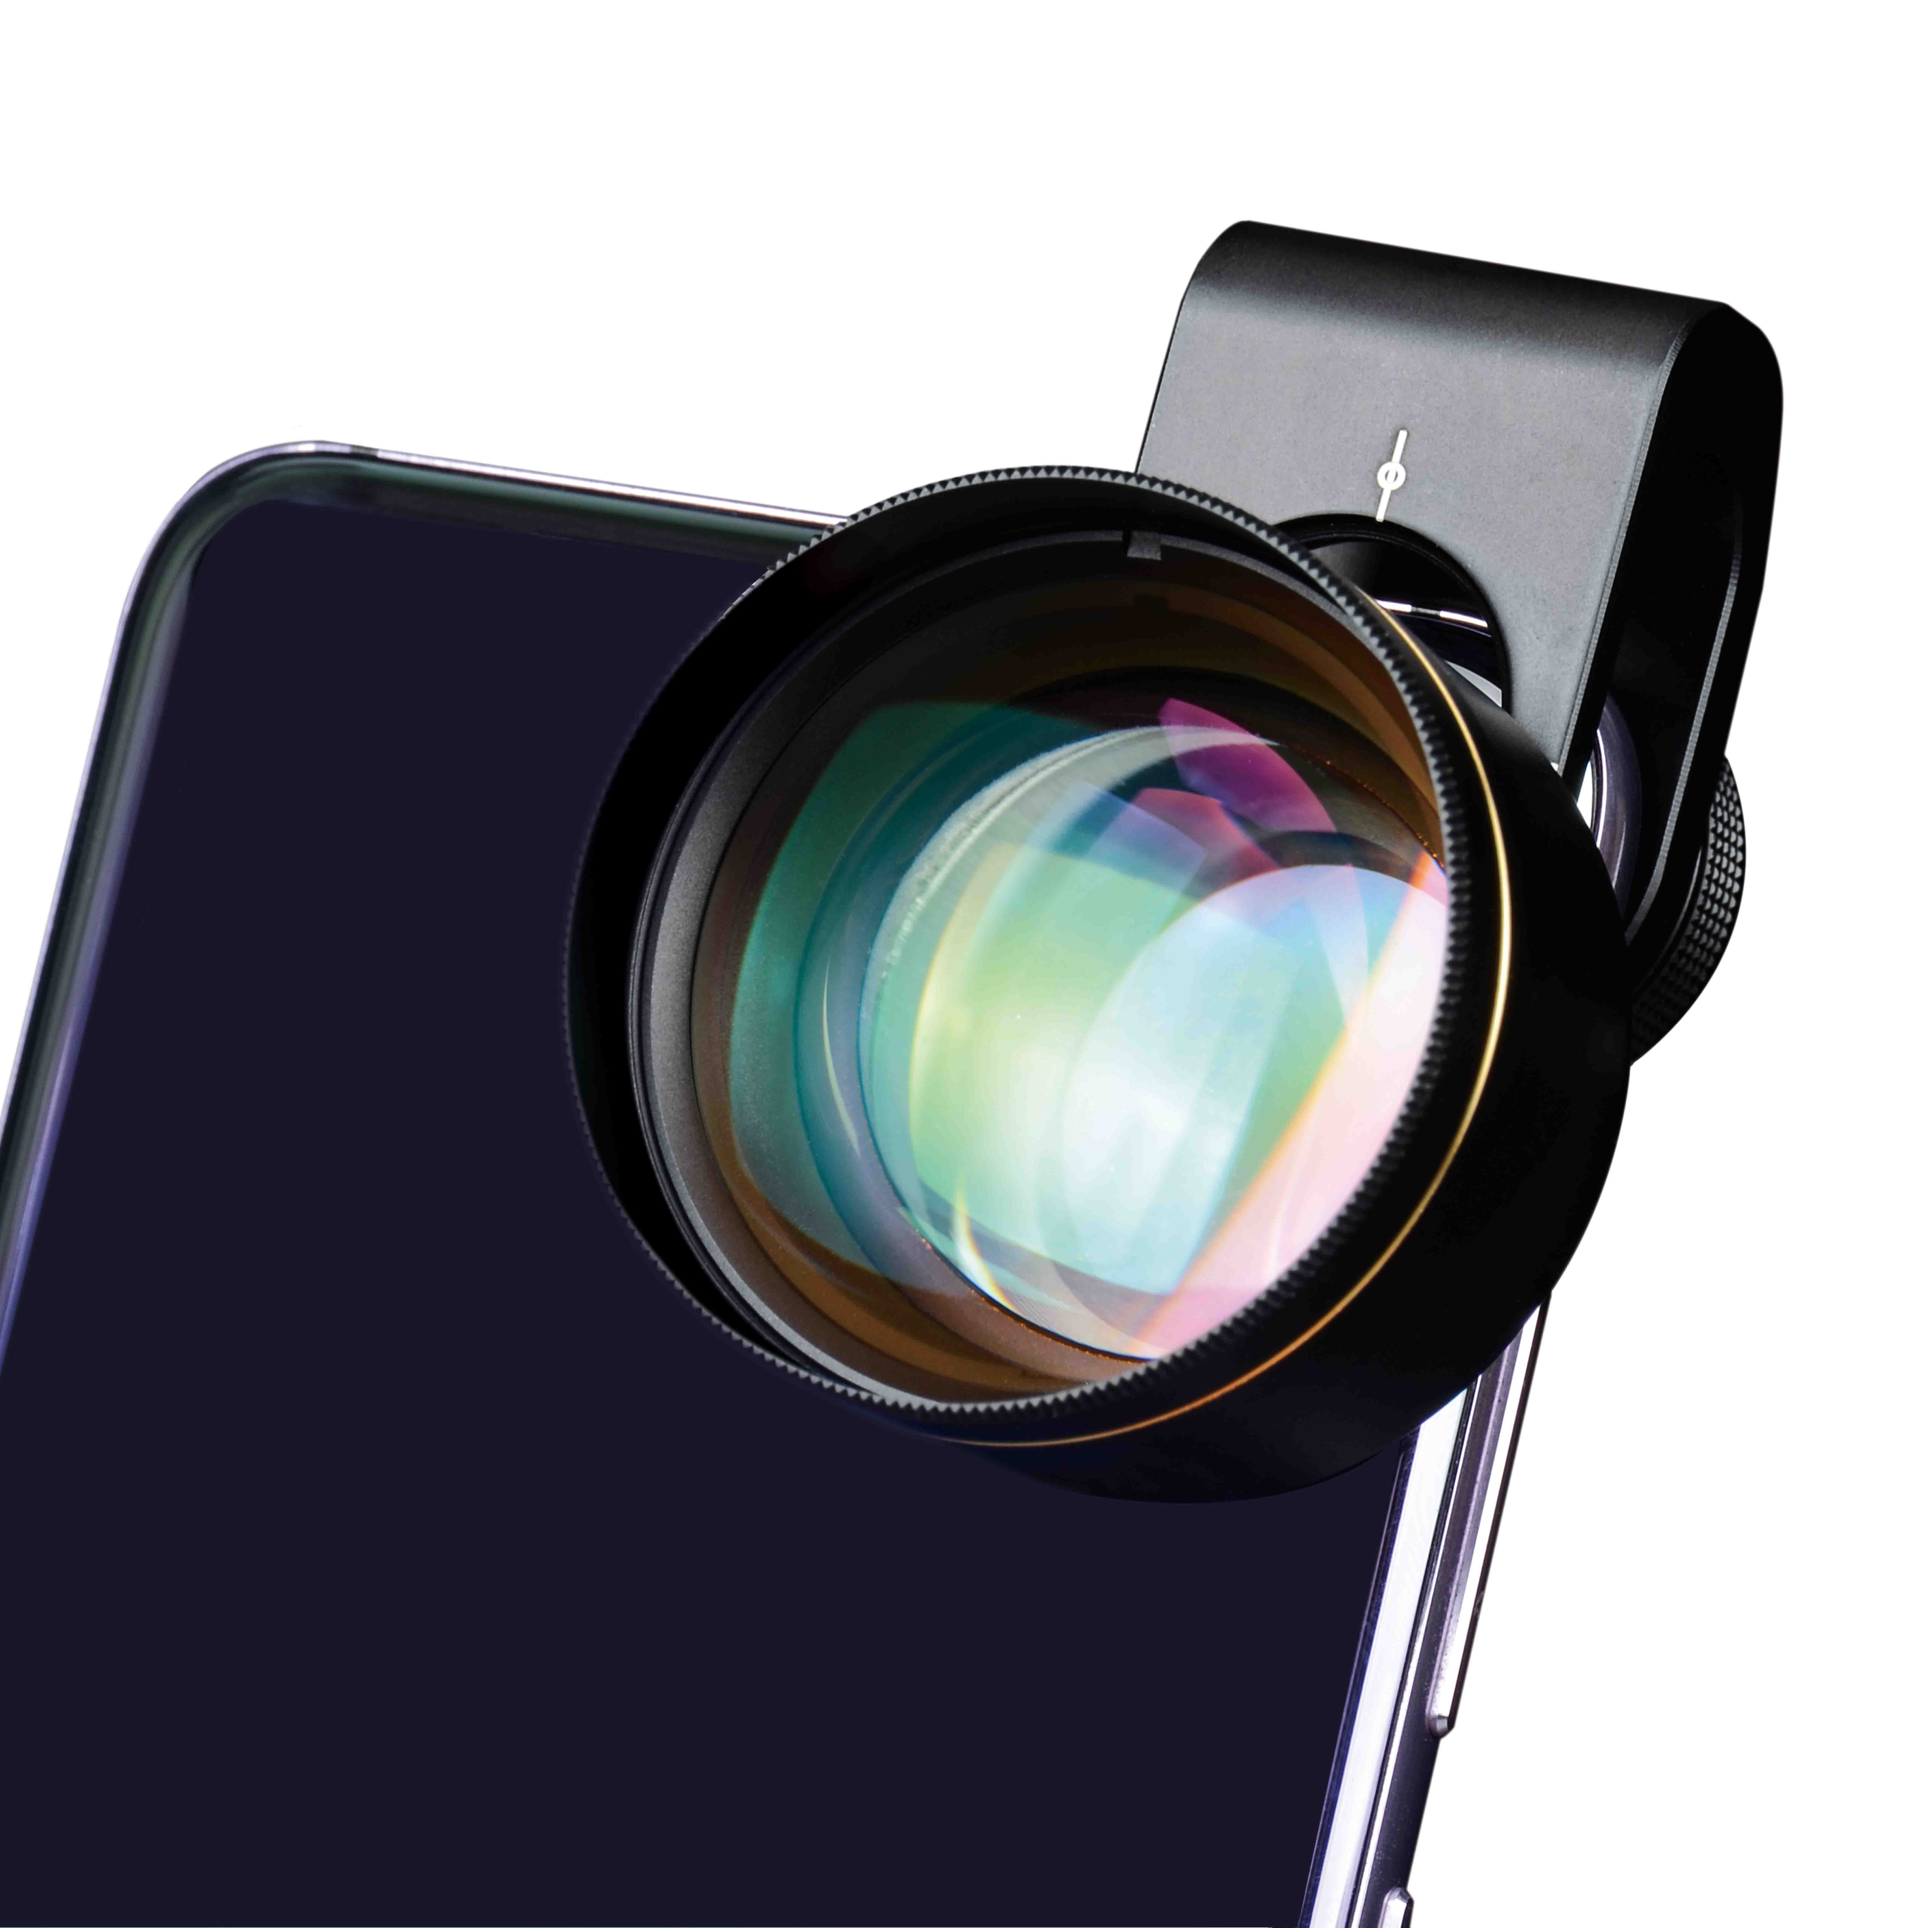 Smartphone Lens series